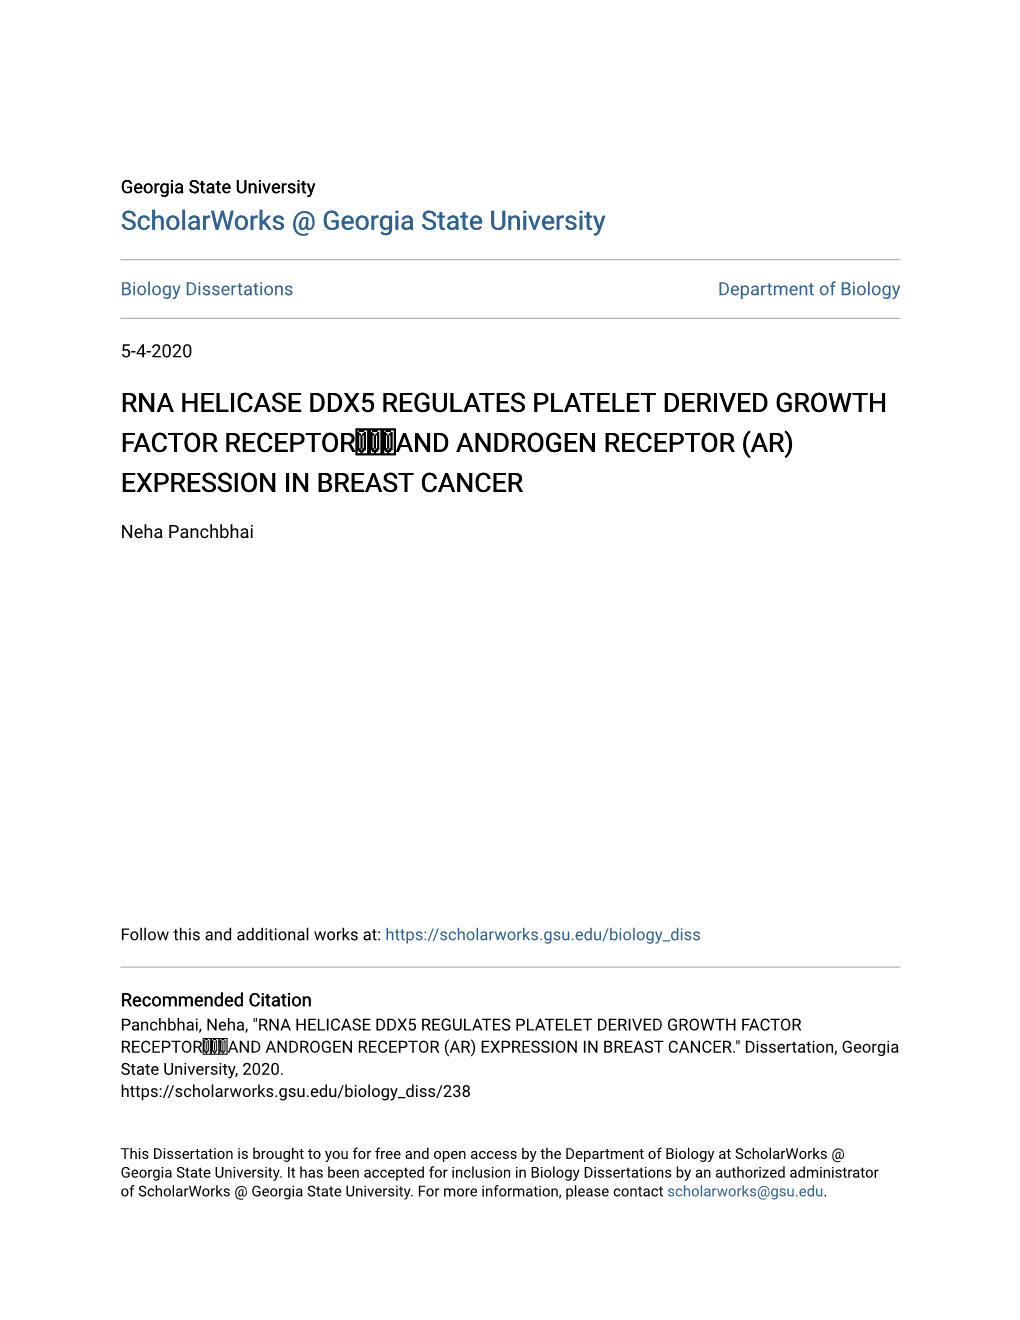 Rna Helicase Ddx5 Regulates Platelet Derived Growth Factor Receptorand Androgen Receptor (Ar) Expression in Breast Cancer